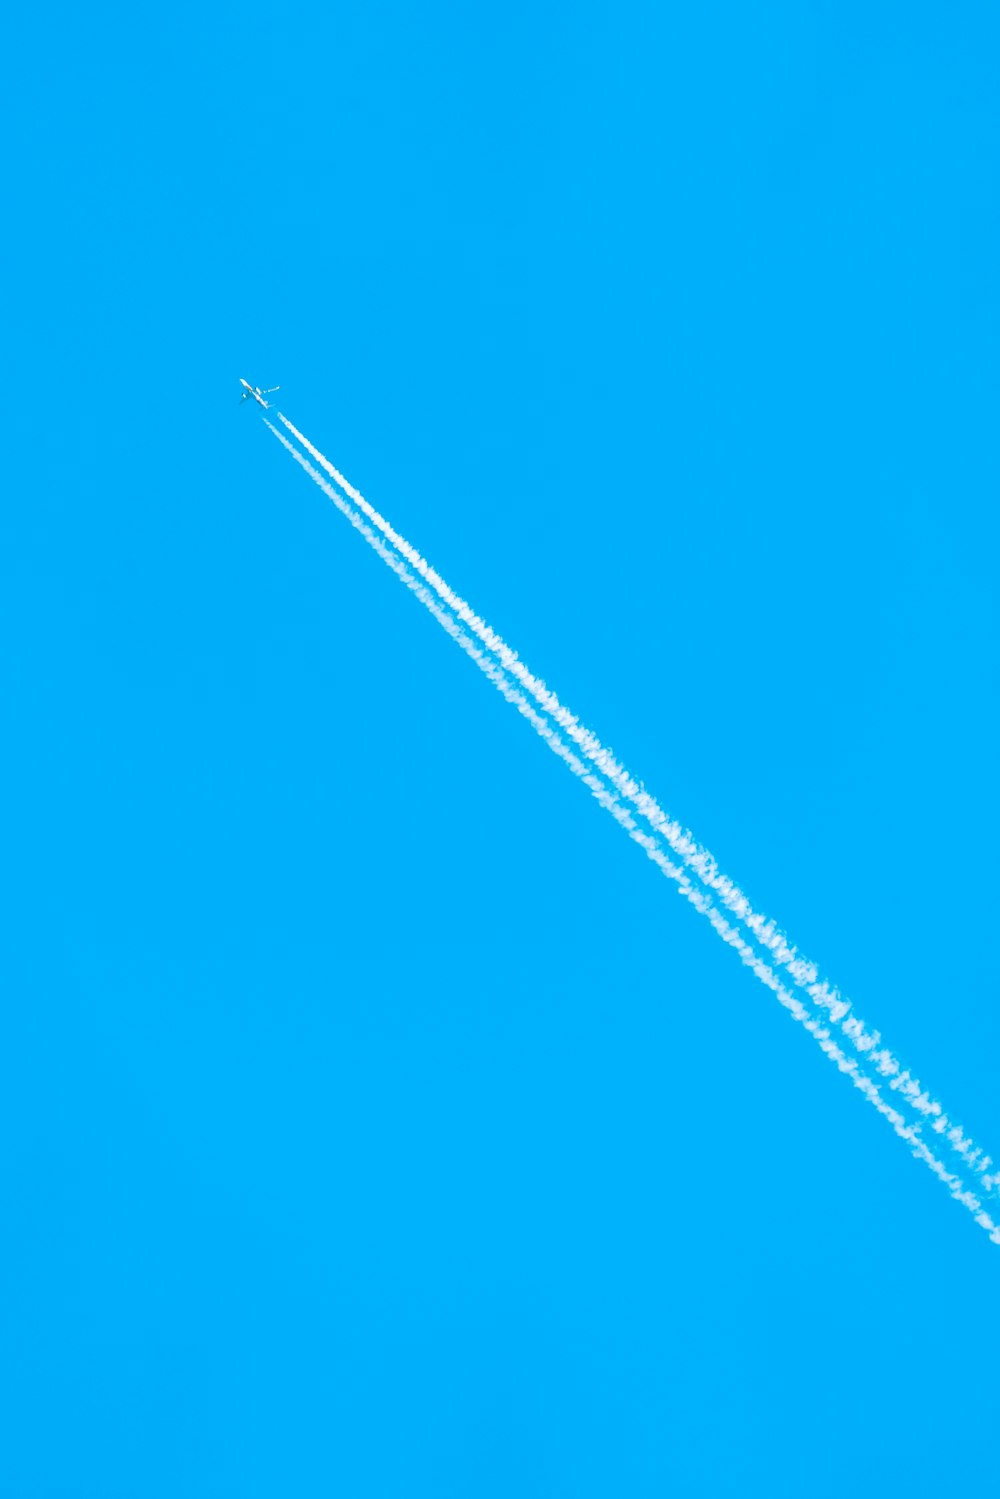 white plane on blue sky